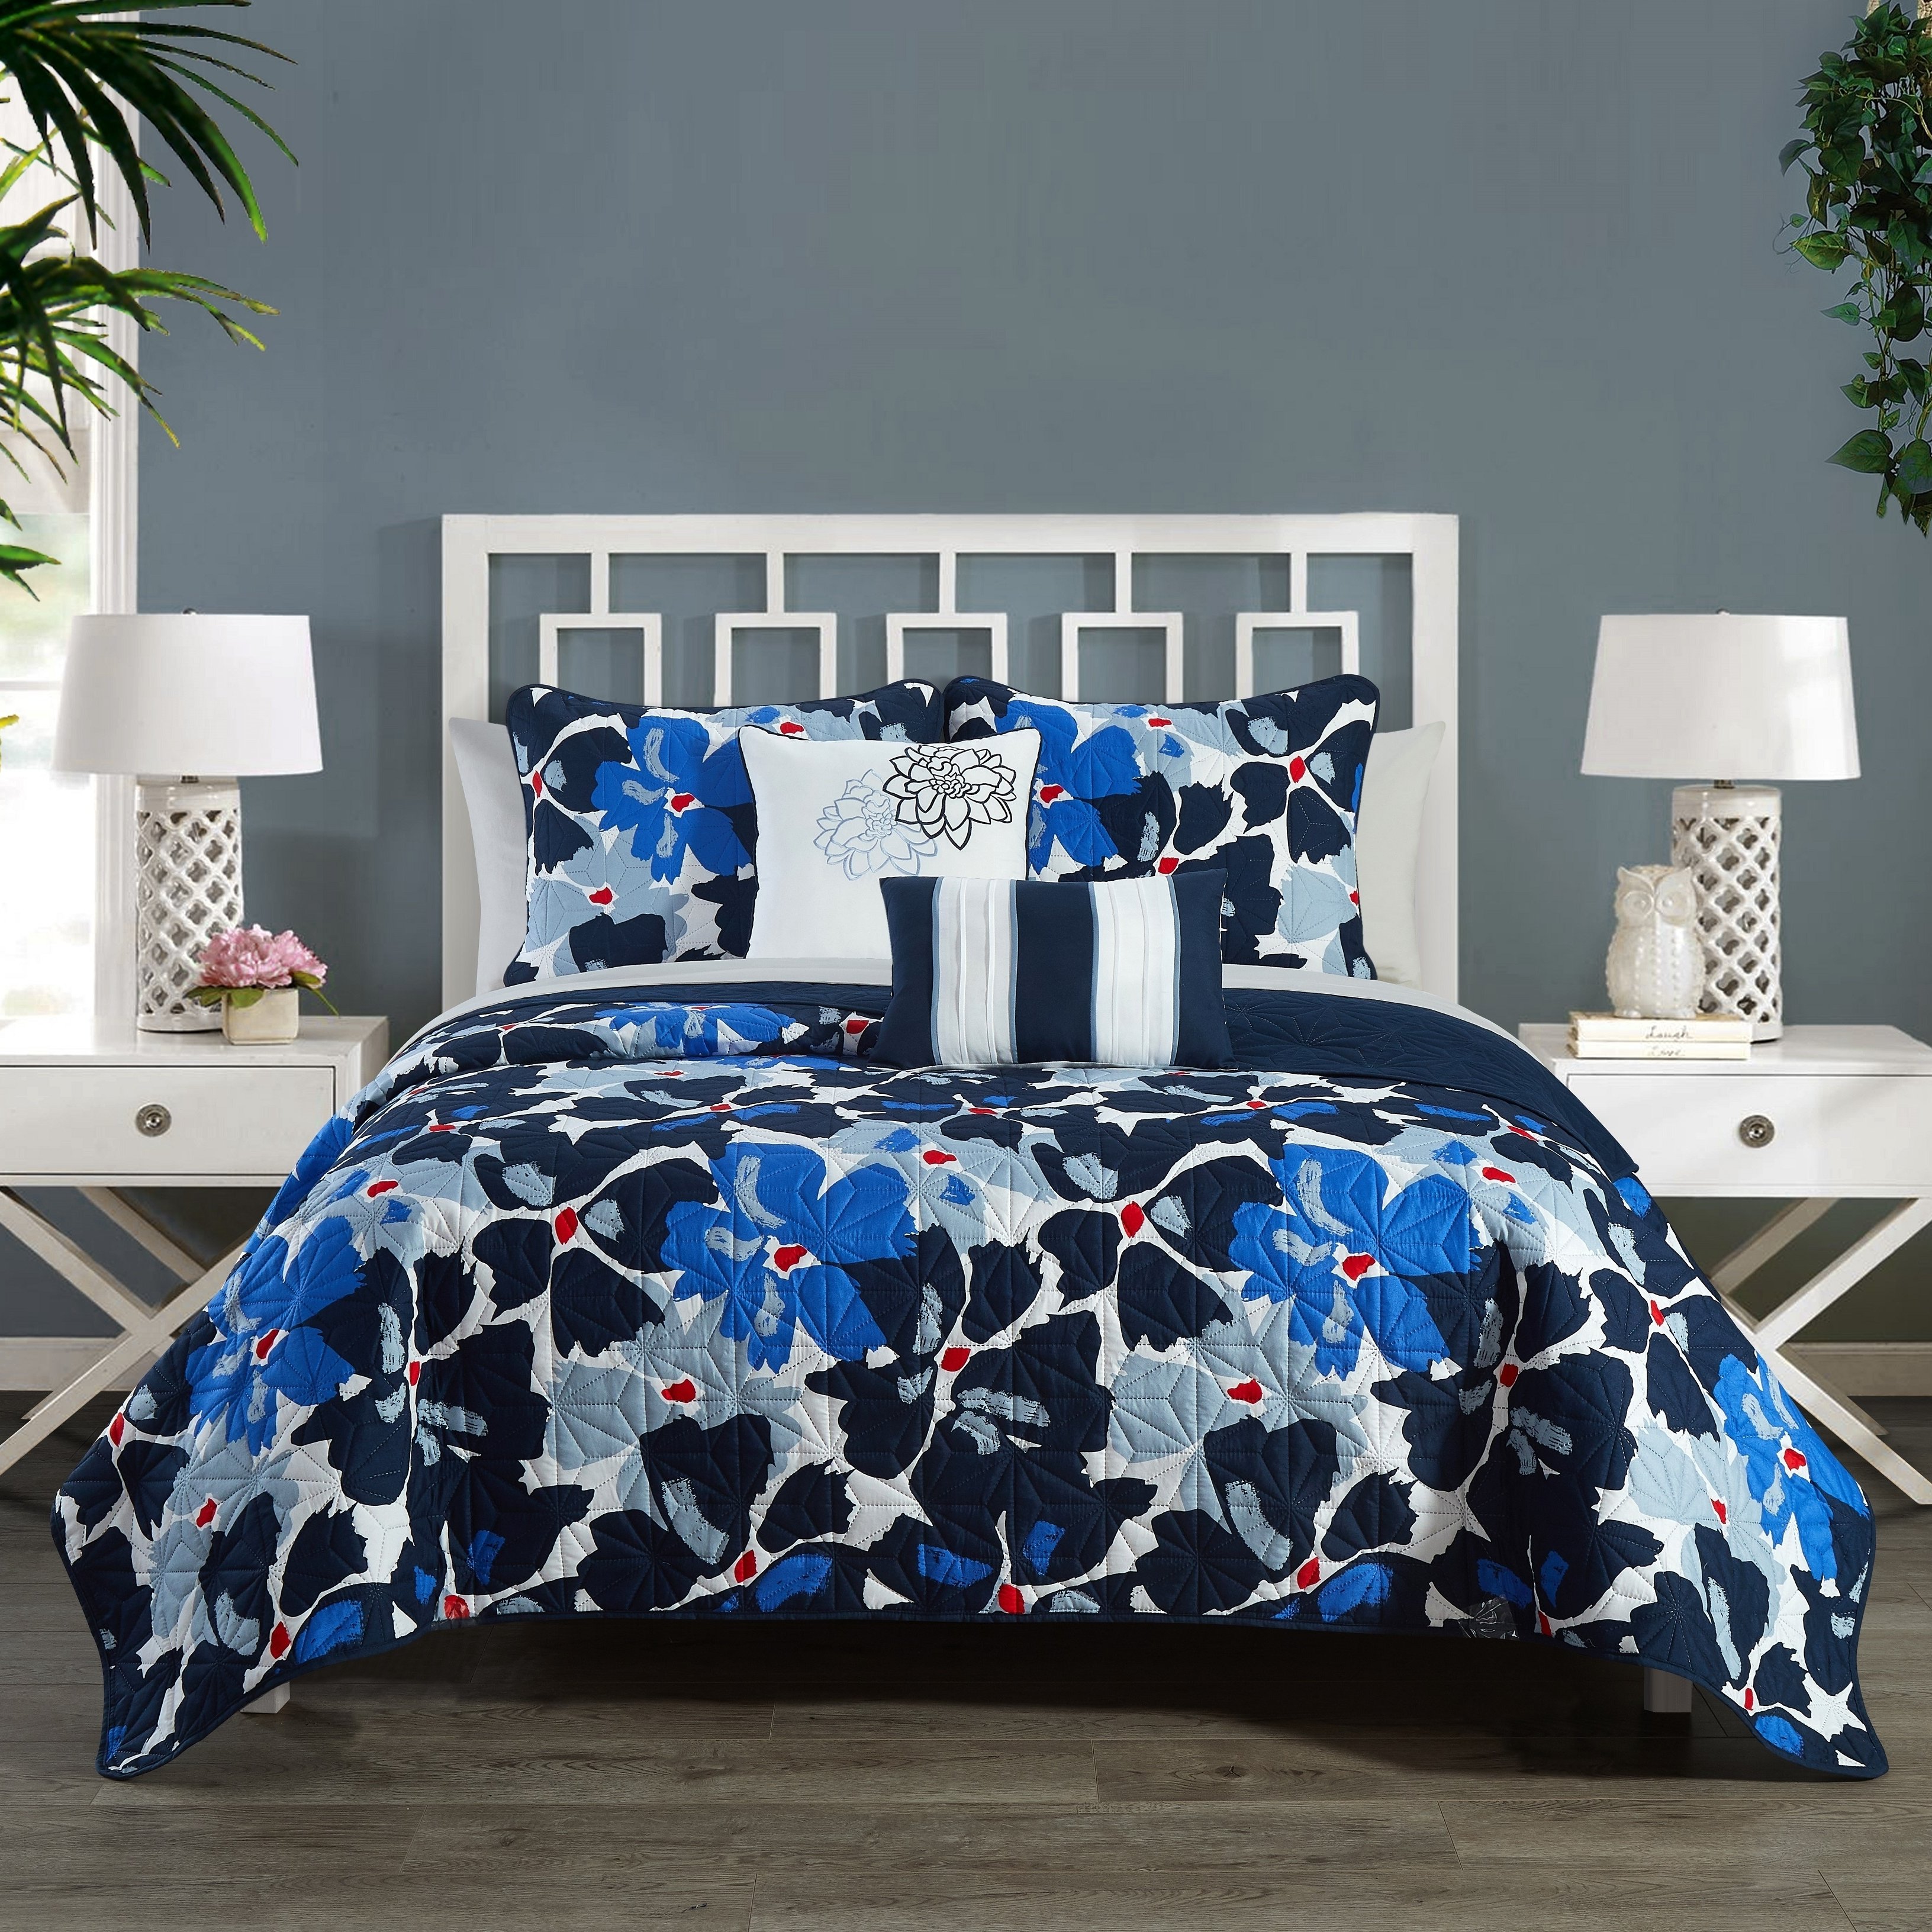 Aster 5 Piece Quilt Set Contemporary Floral Design Bedding - Blue, King